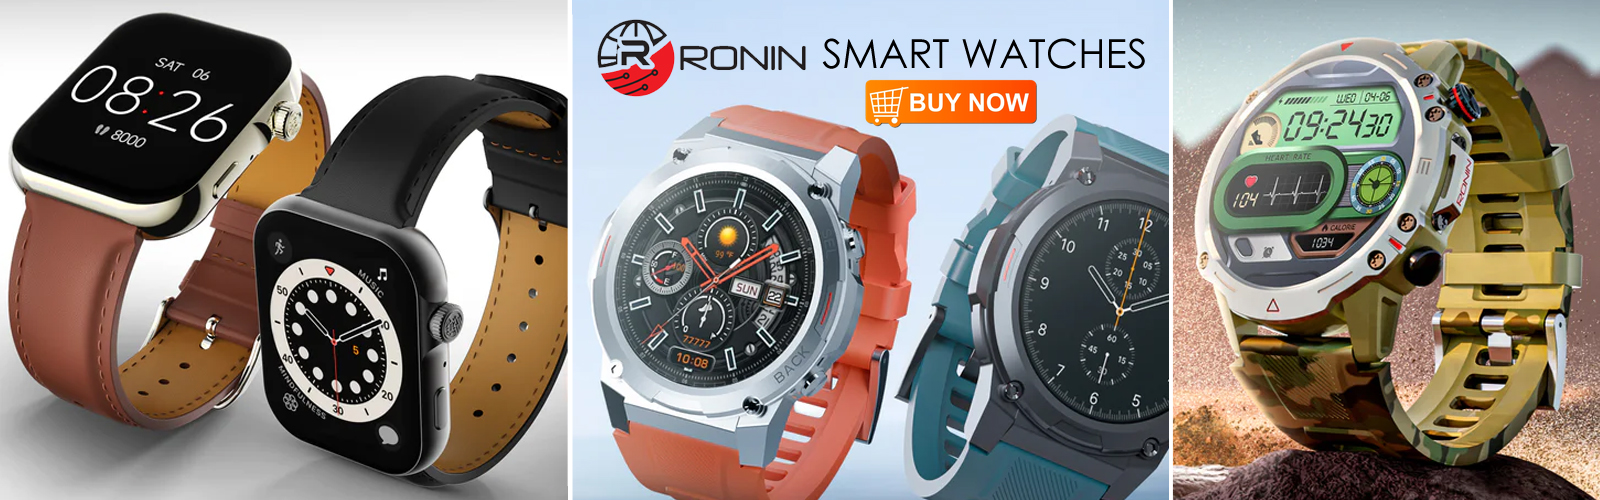 Ronin Smart Watches, Ronin R-011 Smart Watch, Ronin R-011 Smart Watch, Ronin R-010 Smart Watch, Ronin R-09 Ultra Smart Watch, Ronin R-09 Smart Watch, Ronin R-012 Rugged Smart Watch, Ronin R-012 LUXE Smart Watch, Ronin R-07 Smart Watch, Ronin R-011 LUXE Smart Watch, Ronin R-06 Smart Watch, Ronin R-01 Smart Watch, Ronin R-02 Smart Watch, Ronin R-03 Smart Watch, Ronin R-04 Smart Watch, Ronin R-05 Smart Watch